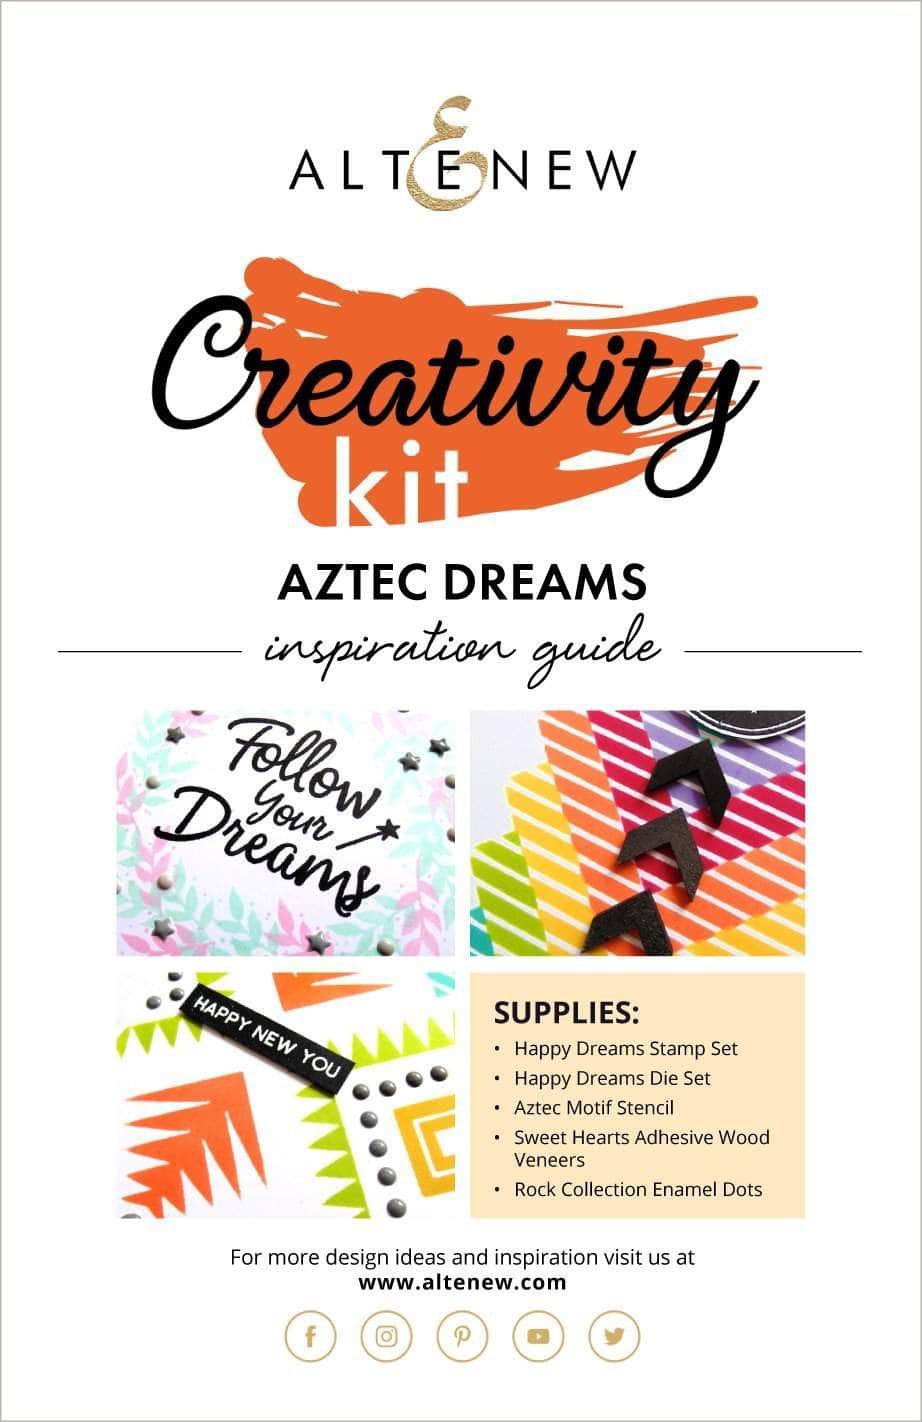 55Printing.com Printed Media Aztec Dreams Creativity Kit Inspiration Guide